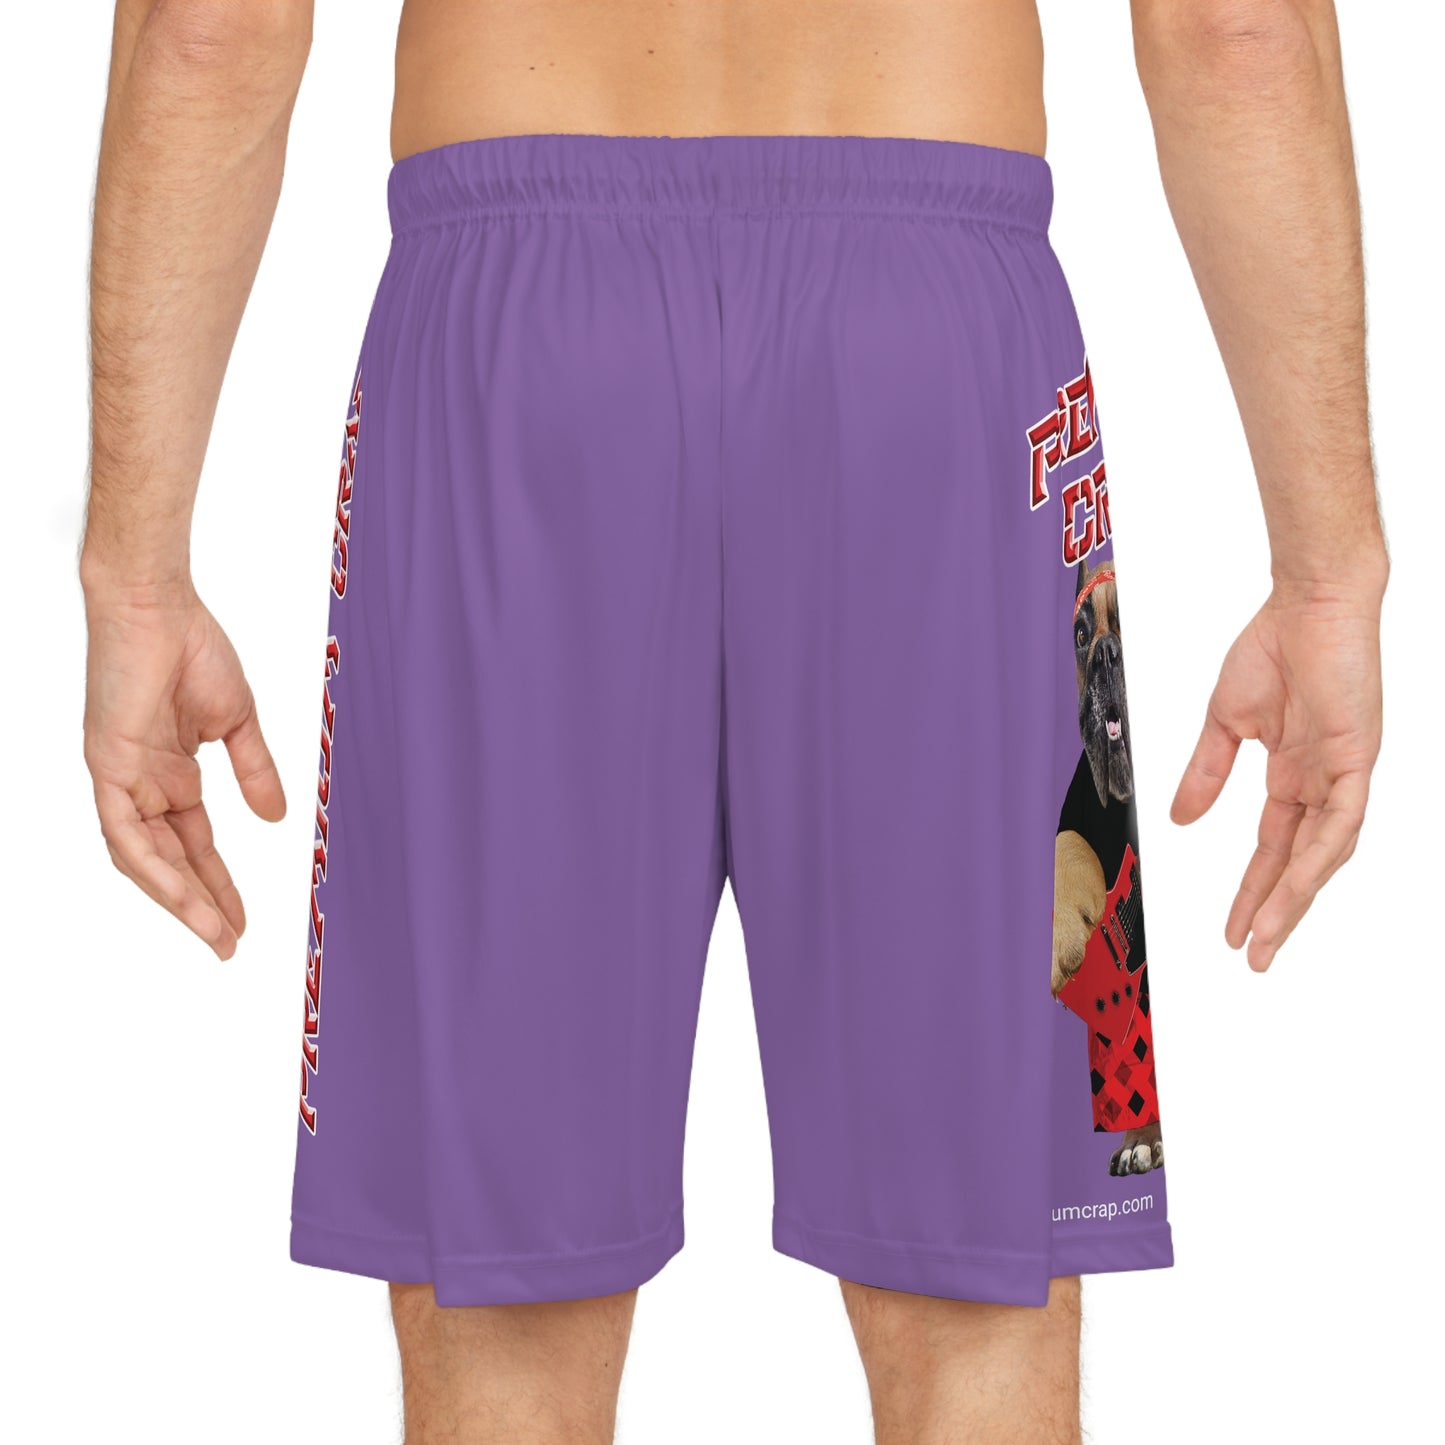 Premium Crap II Basketball Shorts - Light Purple